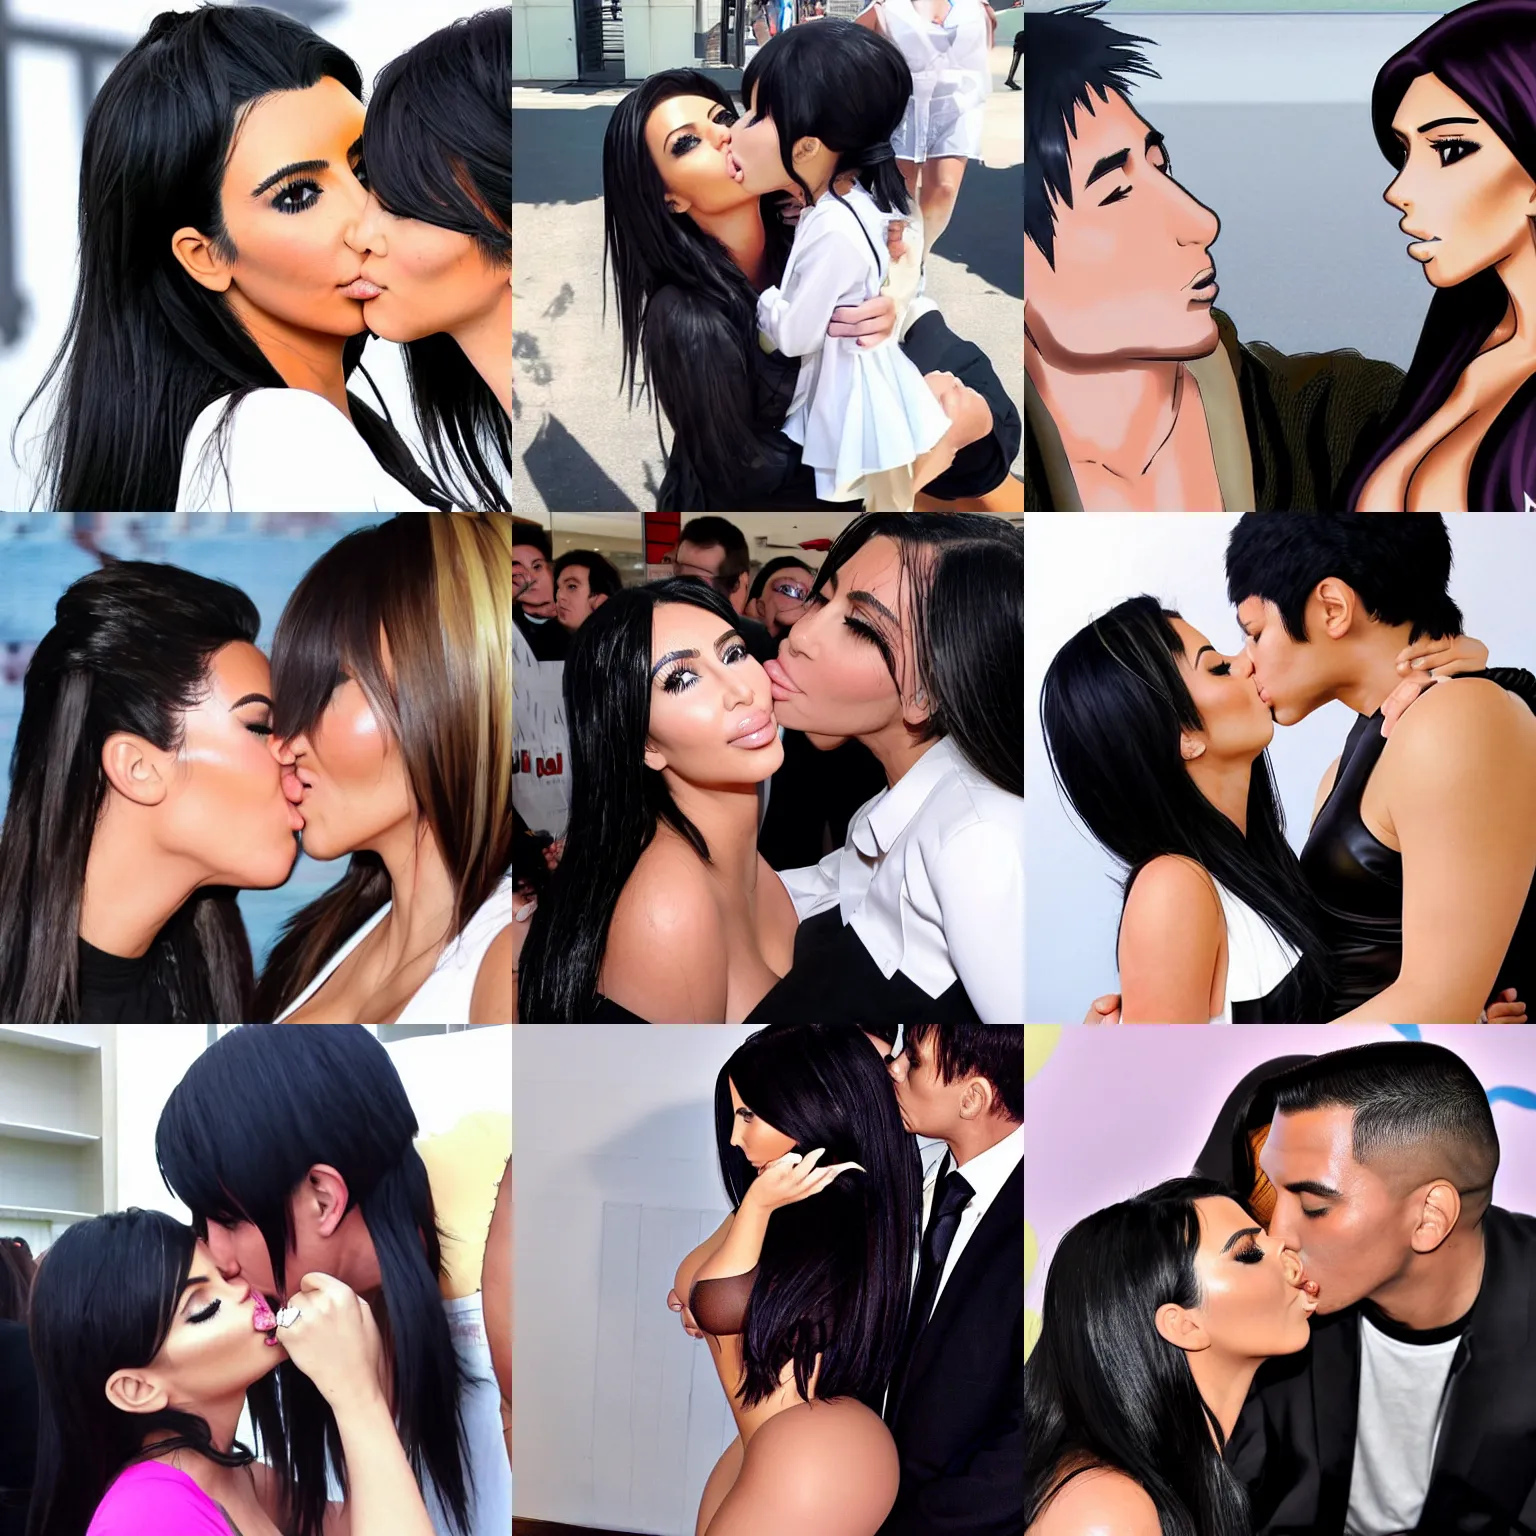 Prompt: kim kardashian kissing anime girl